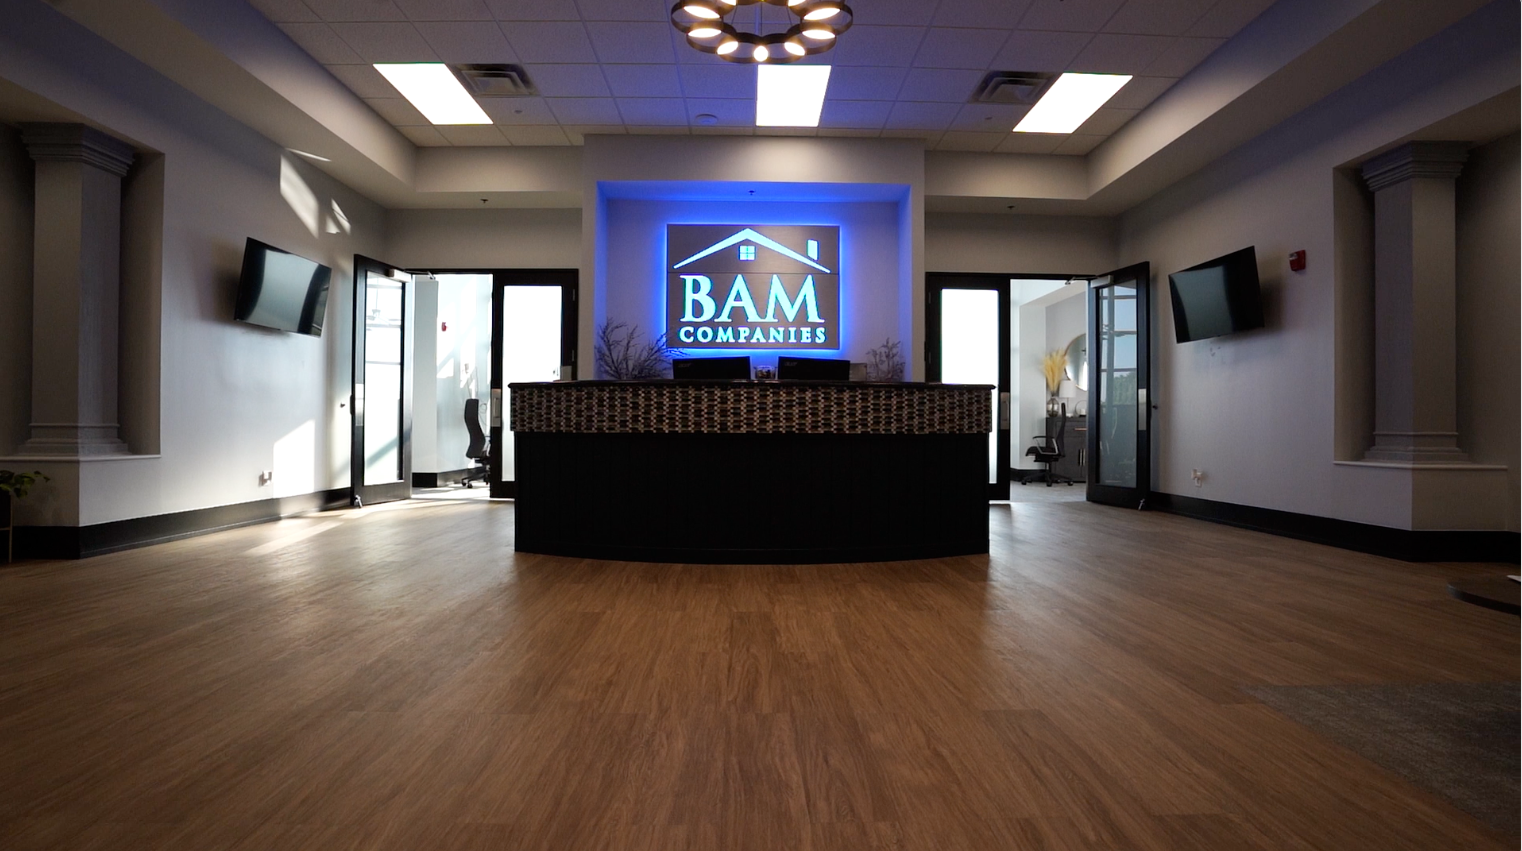 The BAM Companies Headquarters Entrance